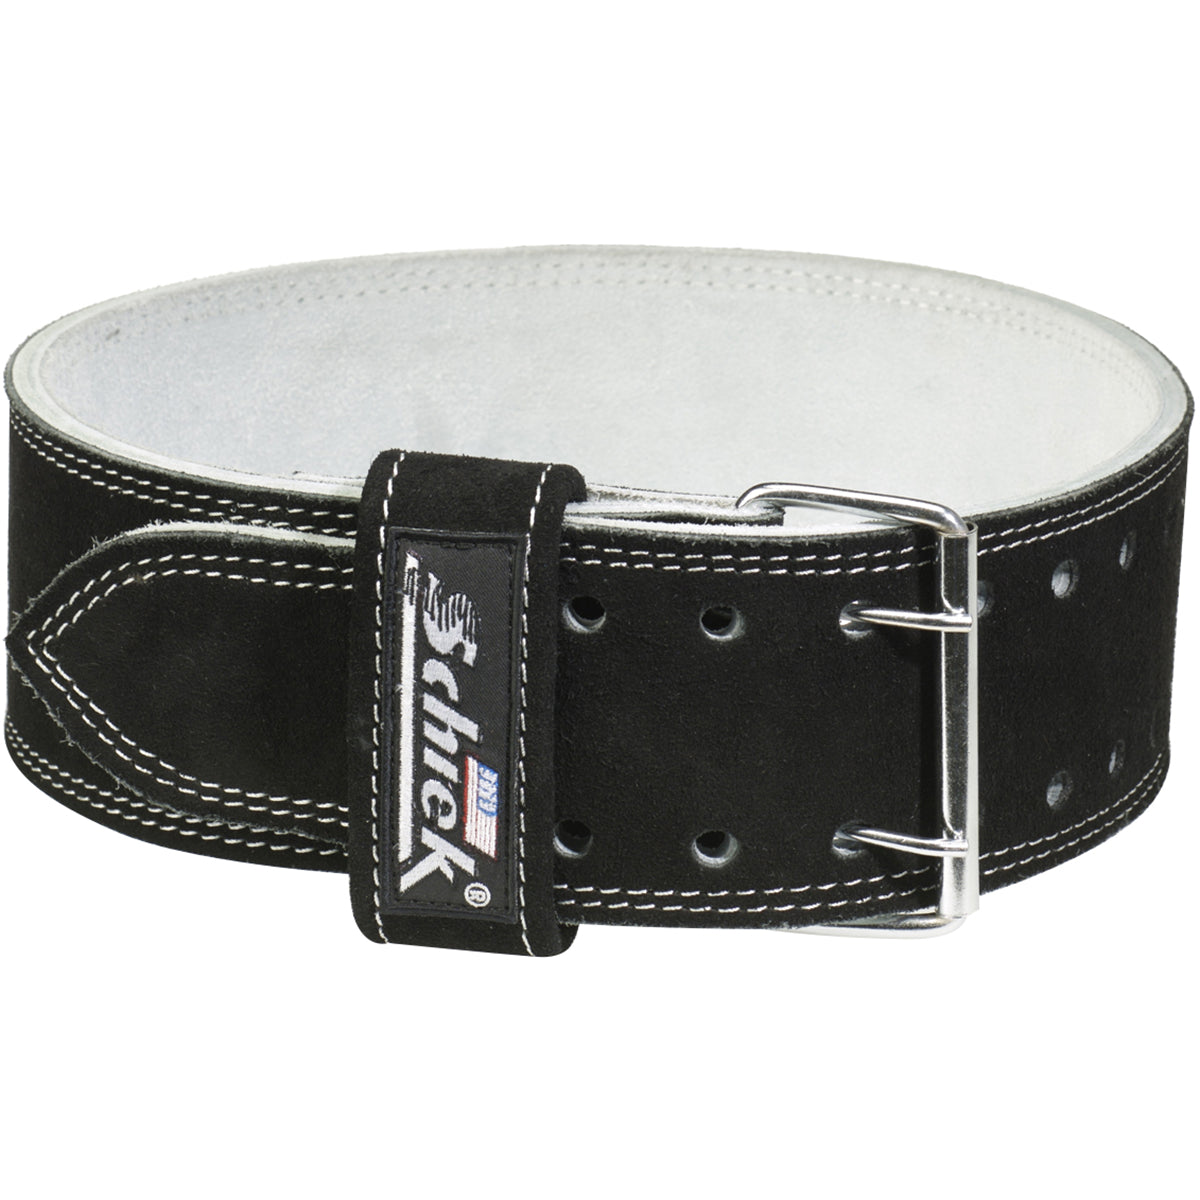 Schiek Sports Model 6010 Leather Competition Power Lifting Belt - Black Schiek Sports